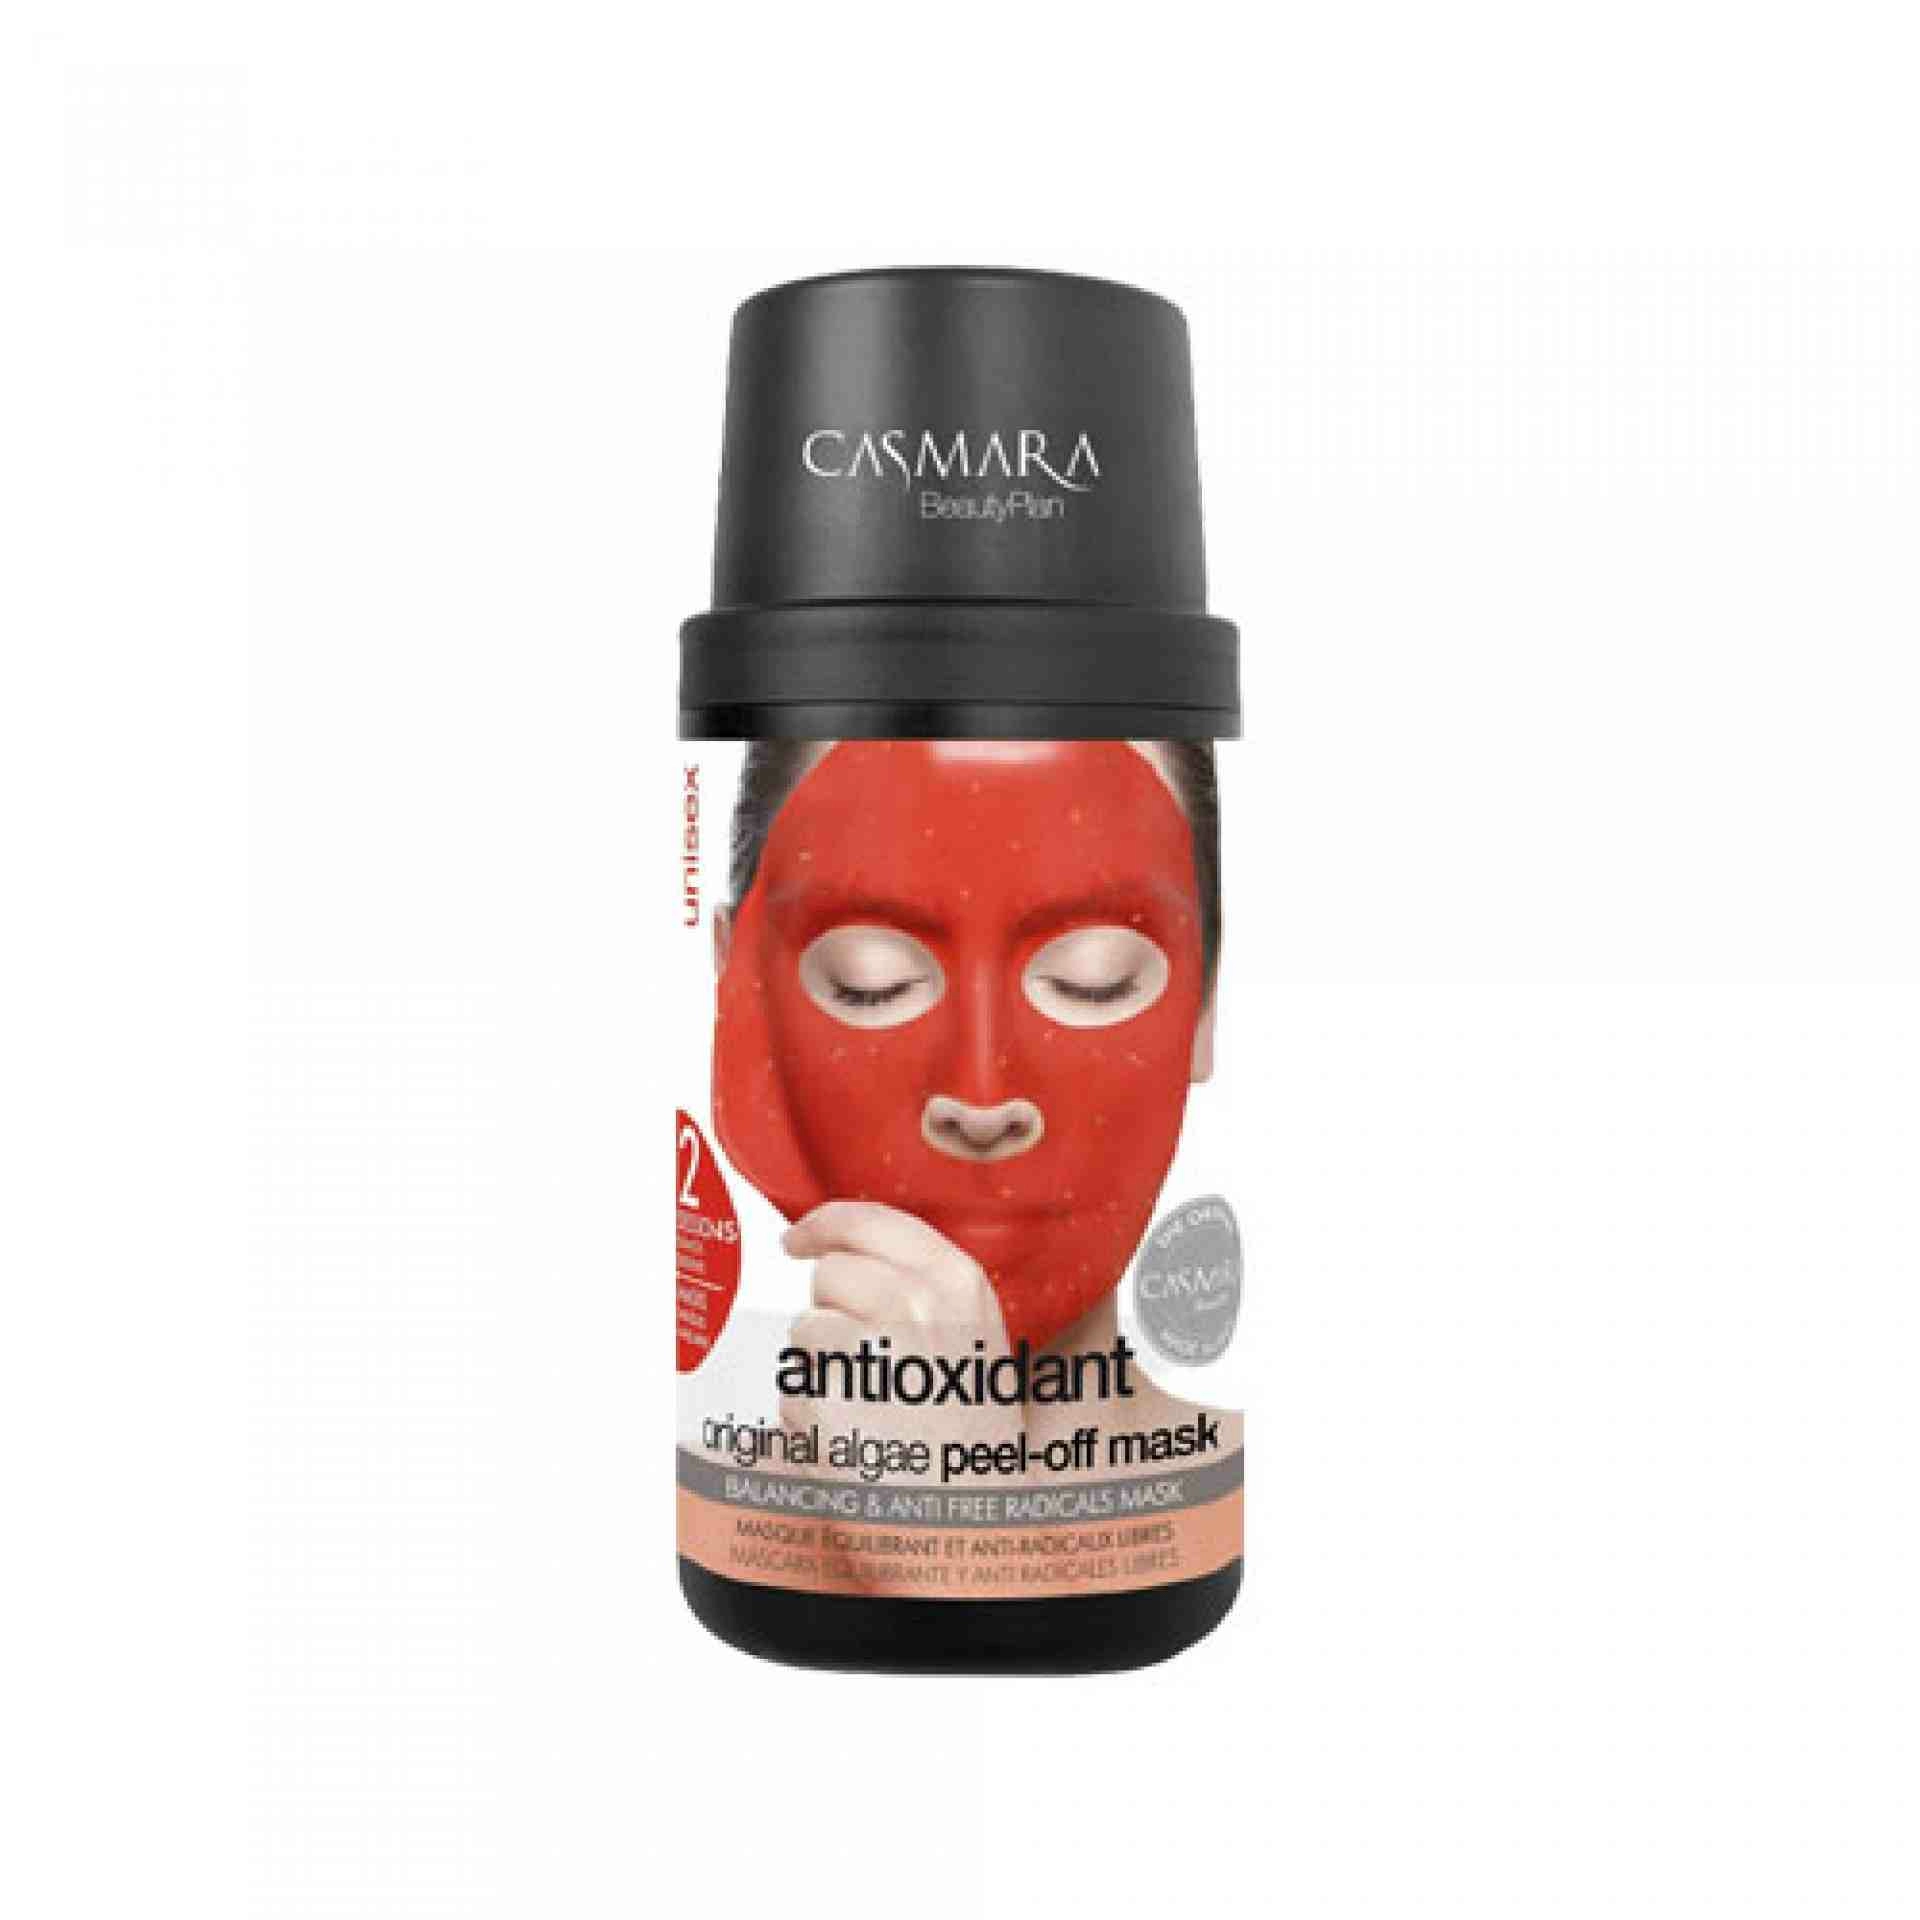 Antioxidant Algae Peel-Off Mask 1 unidad | Mascarilla antioxidante - Casmara®